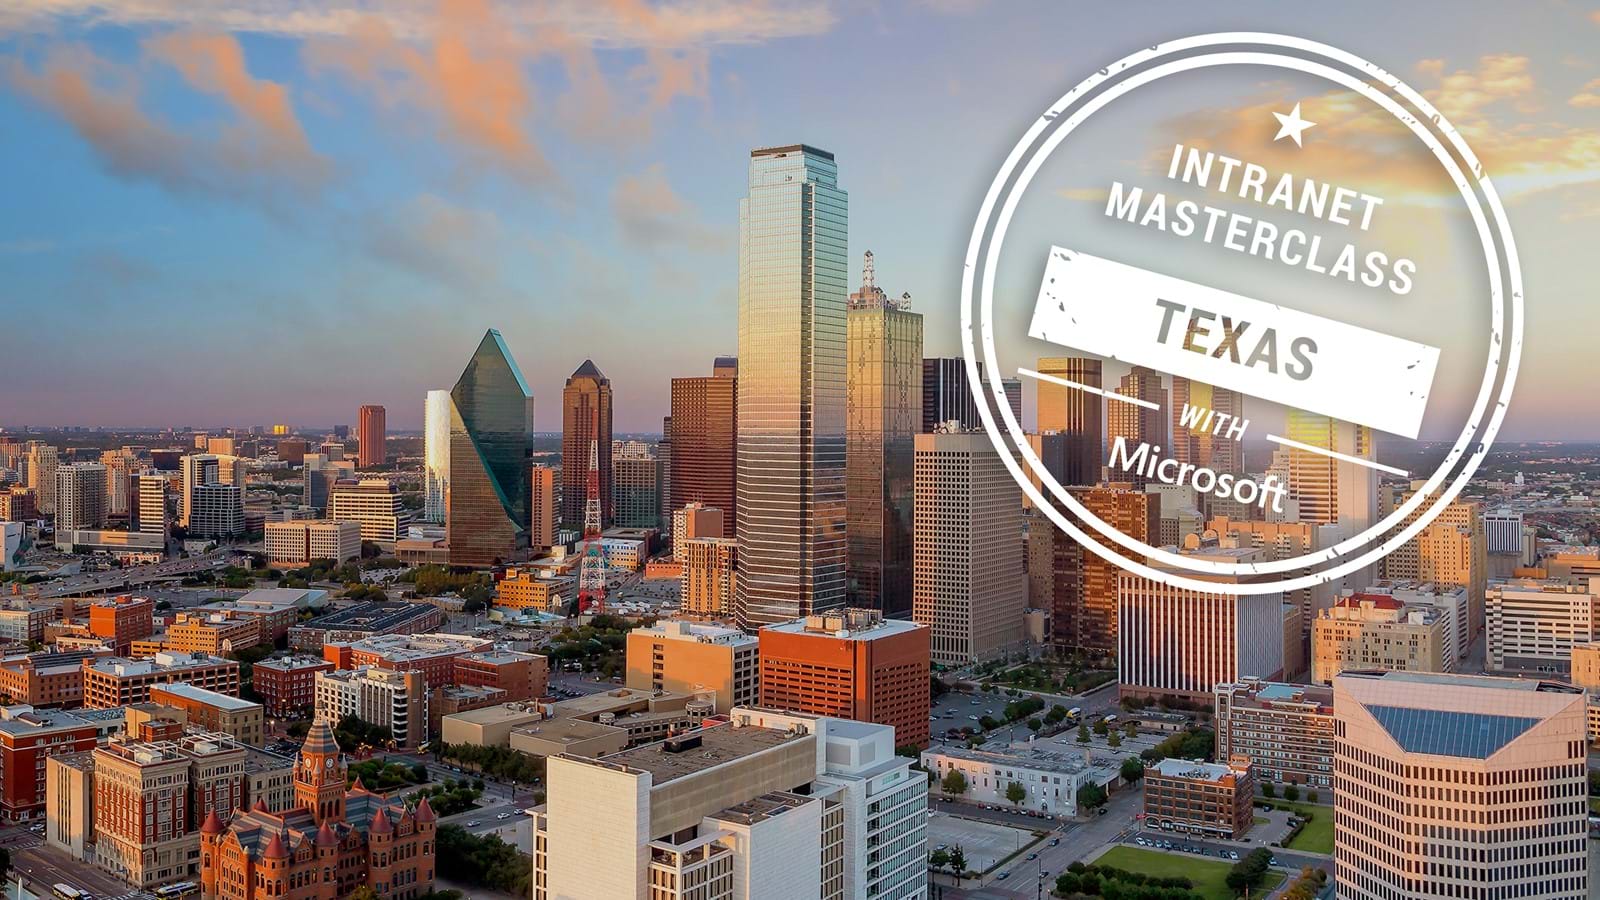 FREE Virtual Intranet Masterclass - Texas